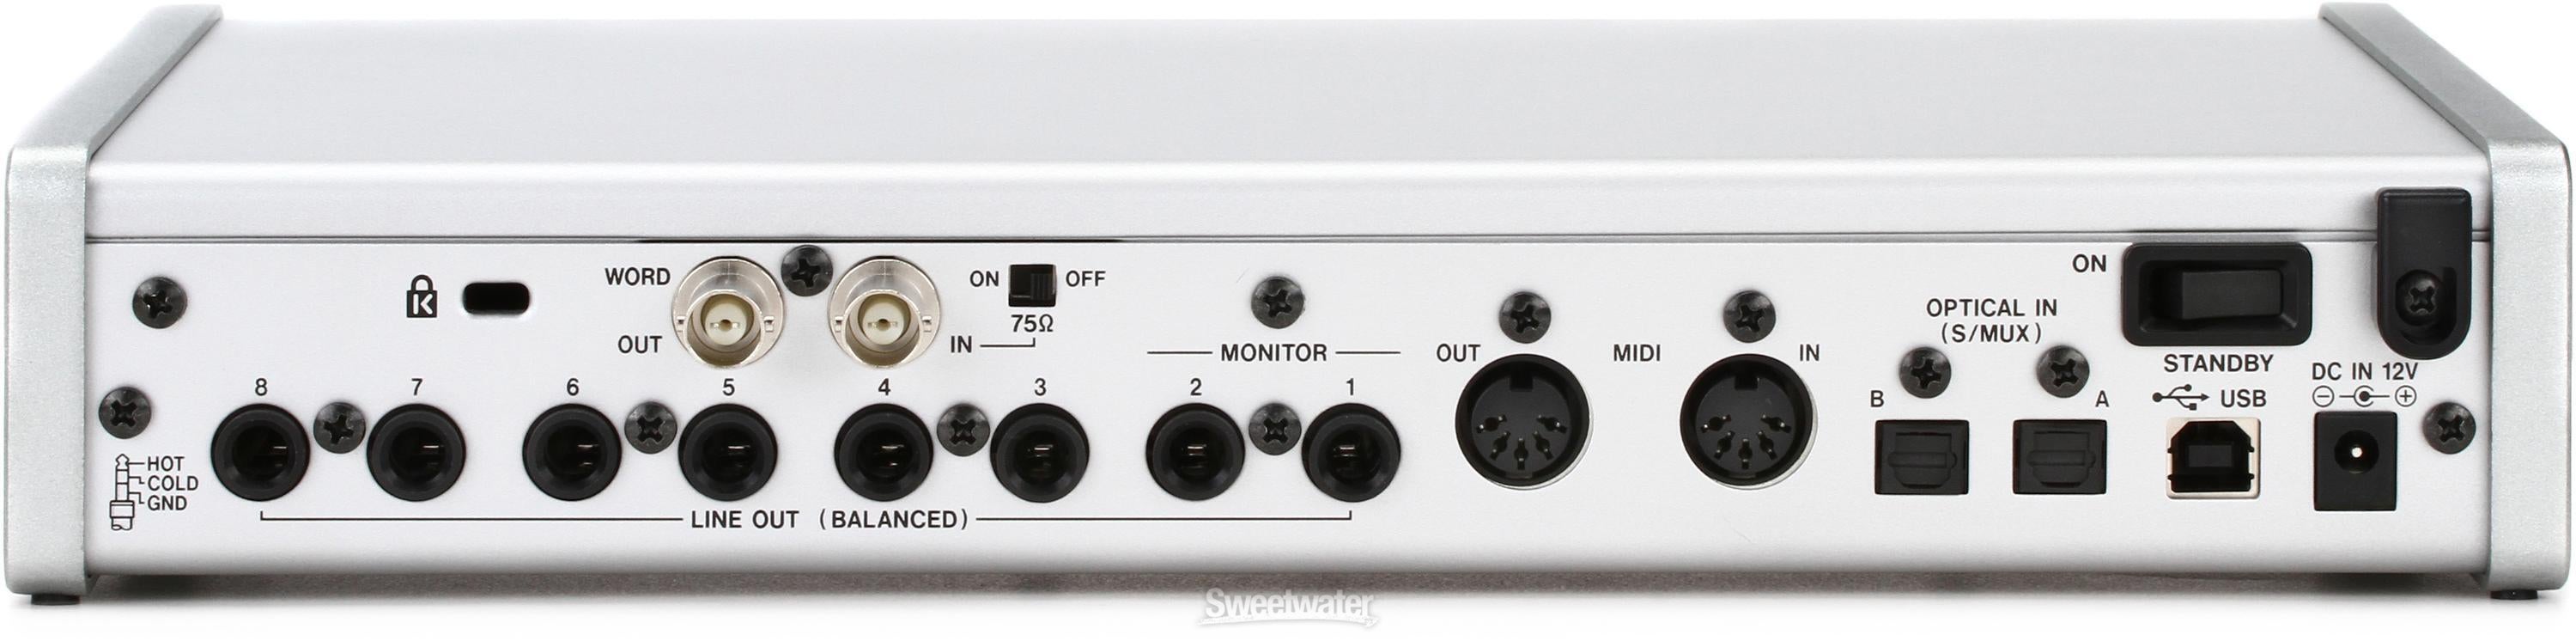 TASCAM Series 208i USB Audio / MIDI Interface | Sweetwater